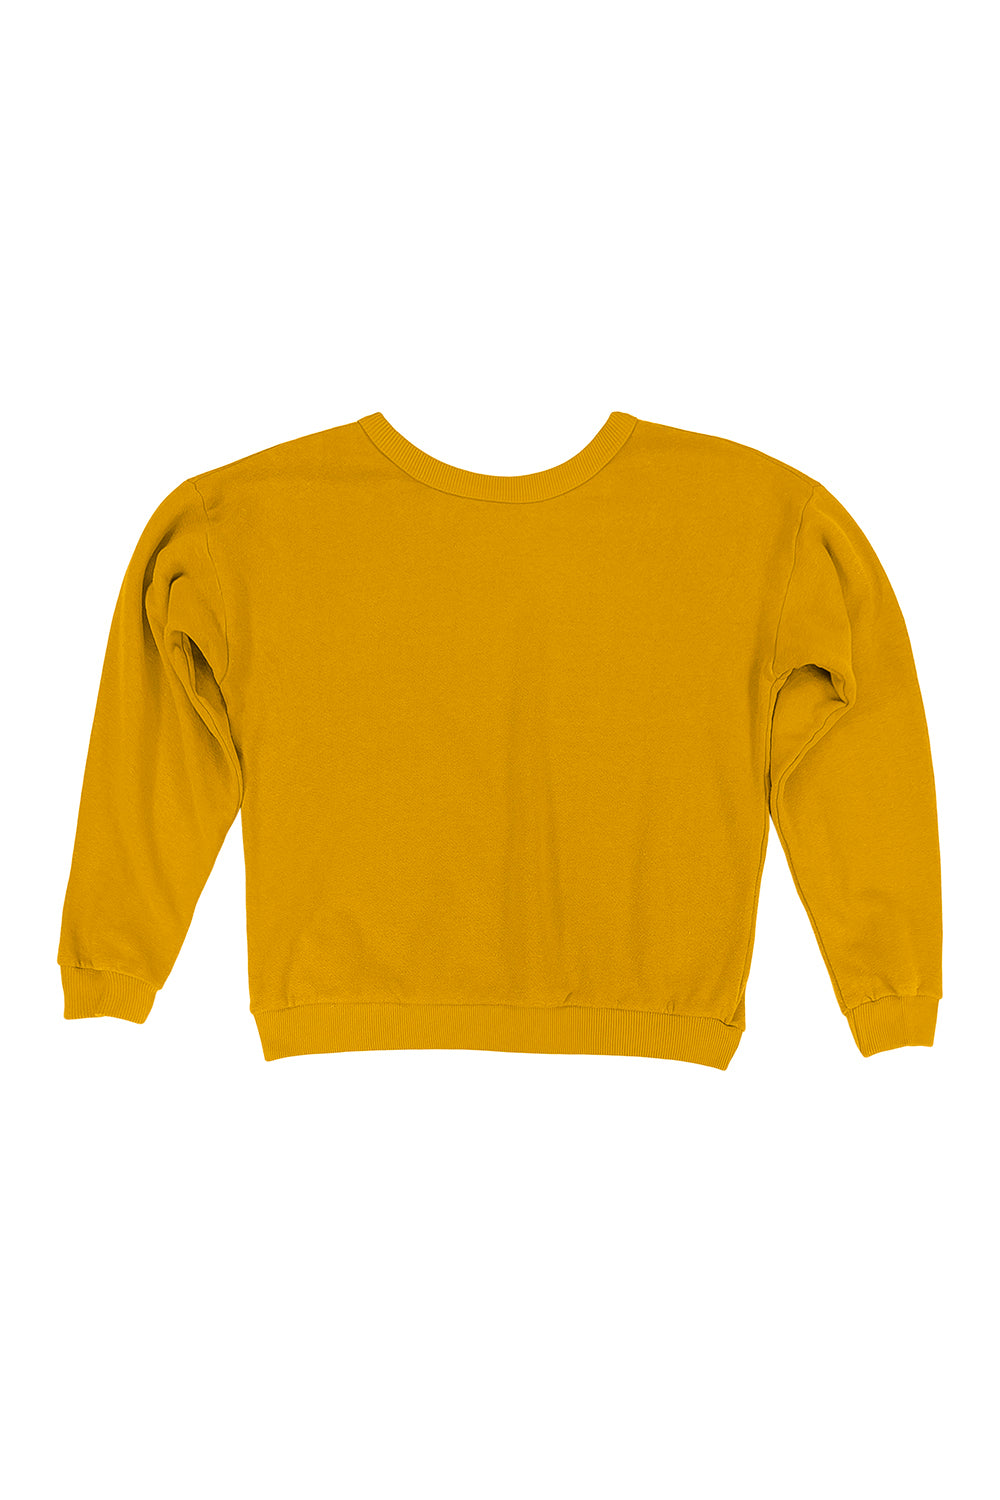 Crux Cropped Sweatshirt - Sale Colors | Jungmaven Hemp Clothing & Accessories / Color: Spicy Mustard